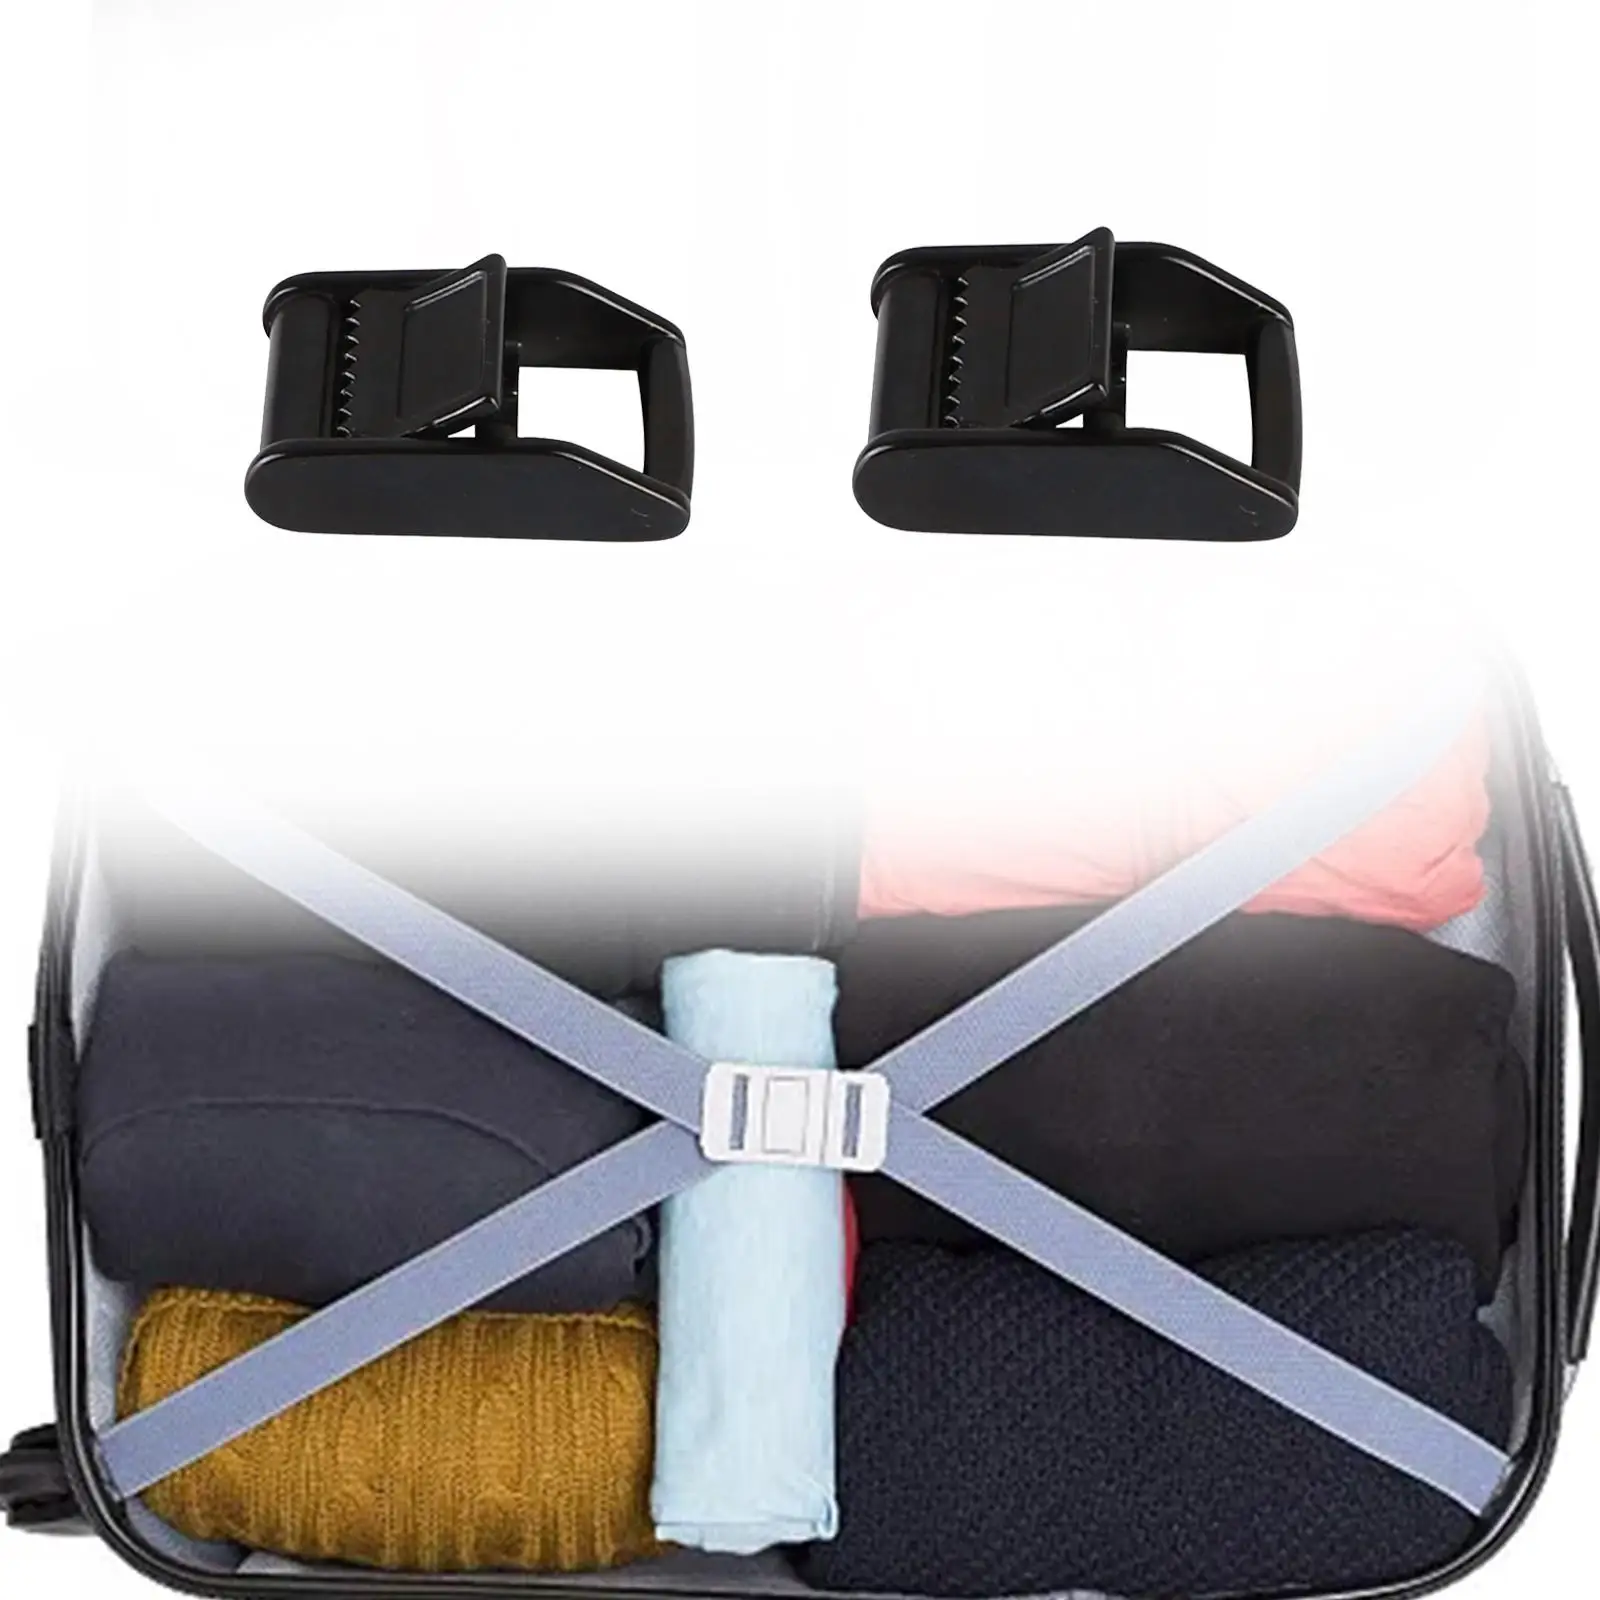 Webbing Buckle Sturdy Belt Buckle Hardware Binding Buckle for DIY Accessories Crafts Making Cargo Lashing Tightening Bags